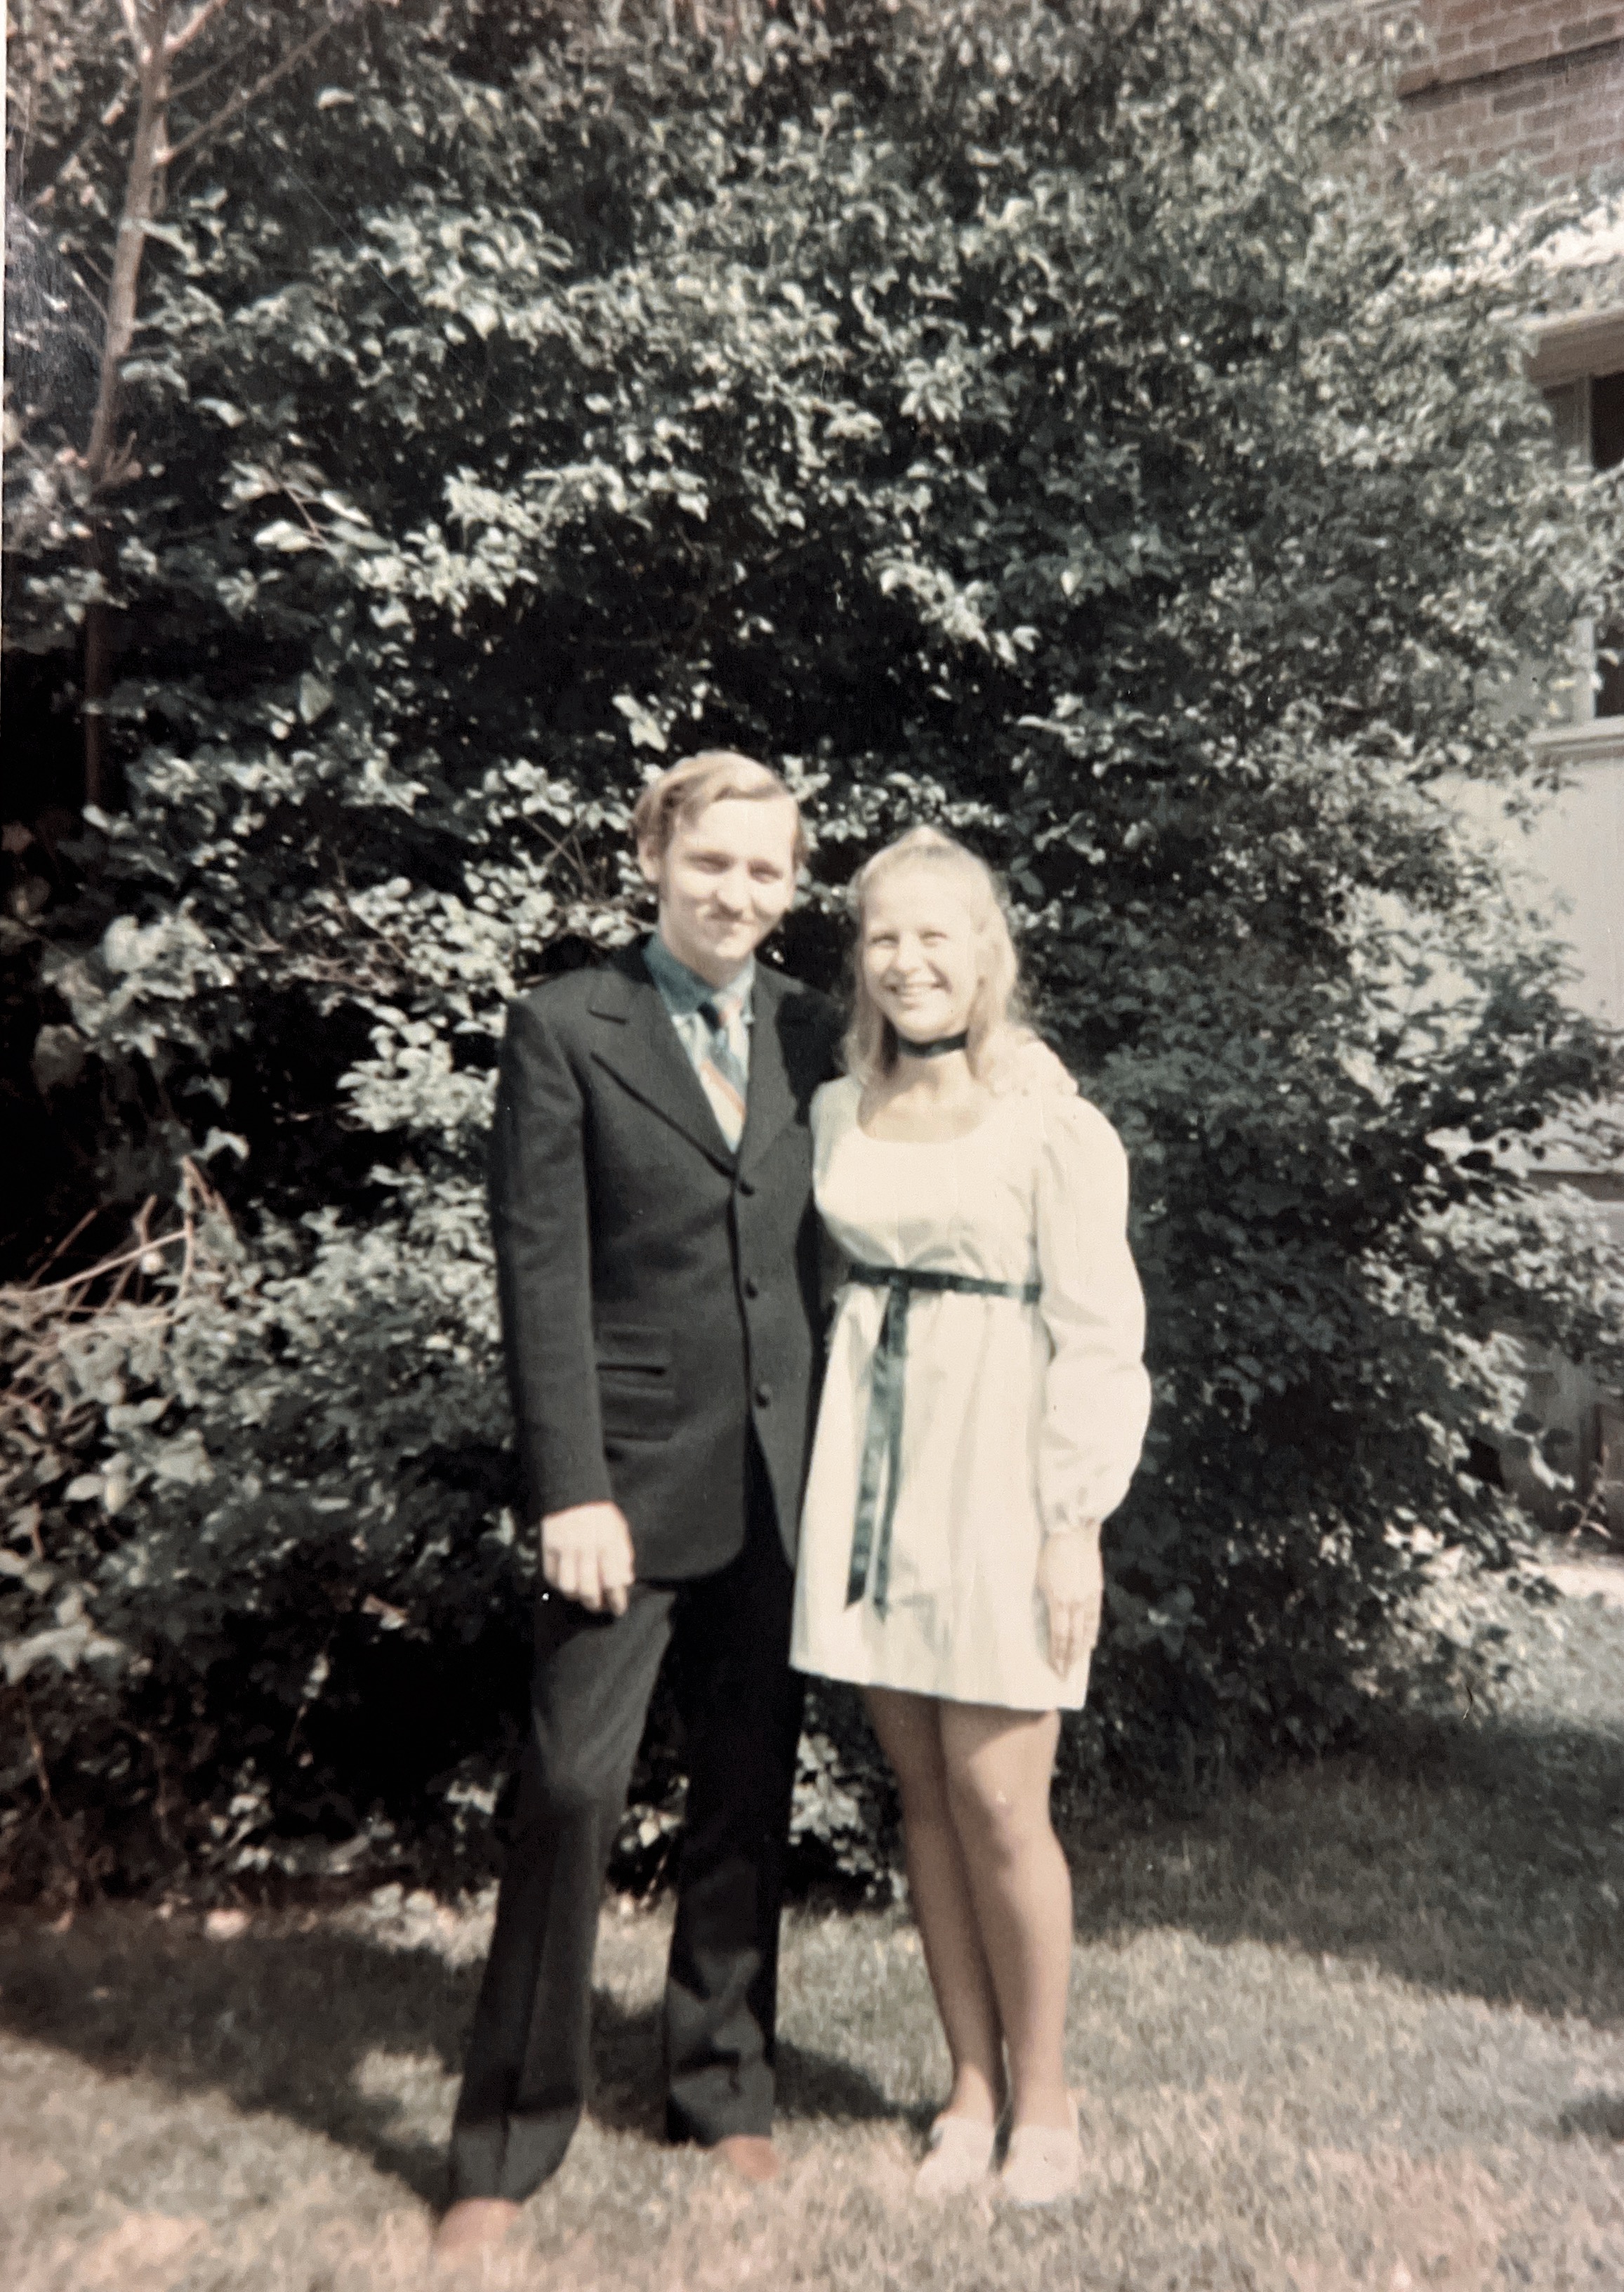 Michael Robert Medisch & Carolyn Sue Cannon
Wedding Day, September 5, 1970